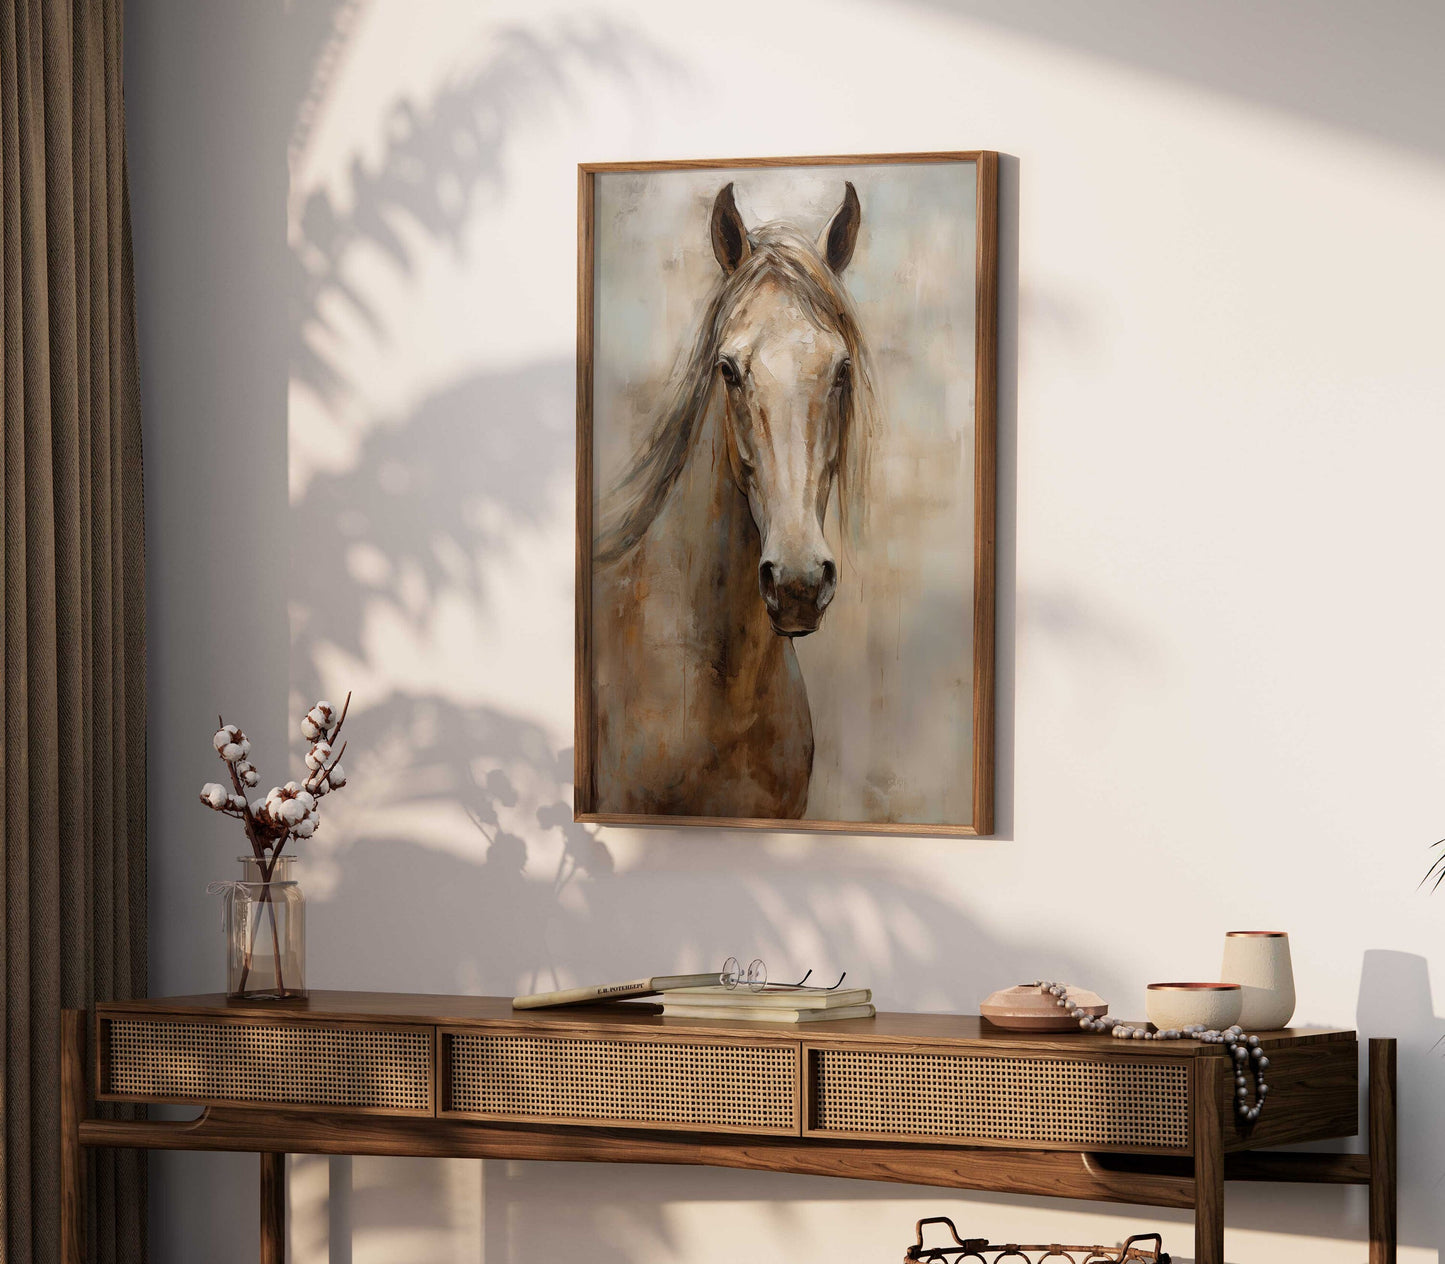 Vintage Horse Print Wall Art, Equestrian Home Decor, Horse Portrait Painting, Horse Lover Gift, Vintage Animal Prints, Digital Printable Art